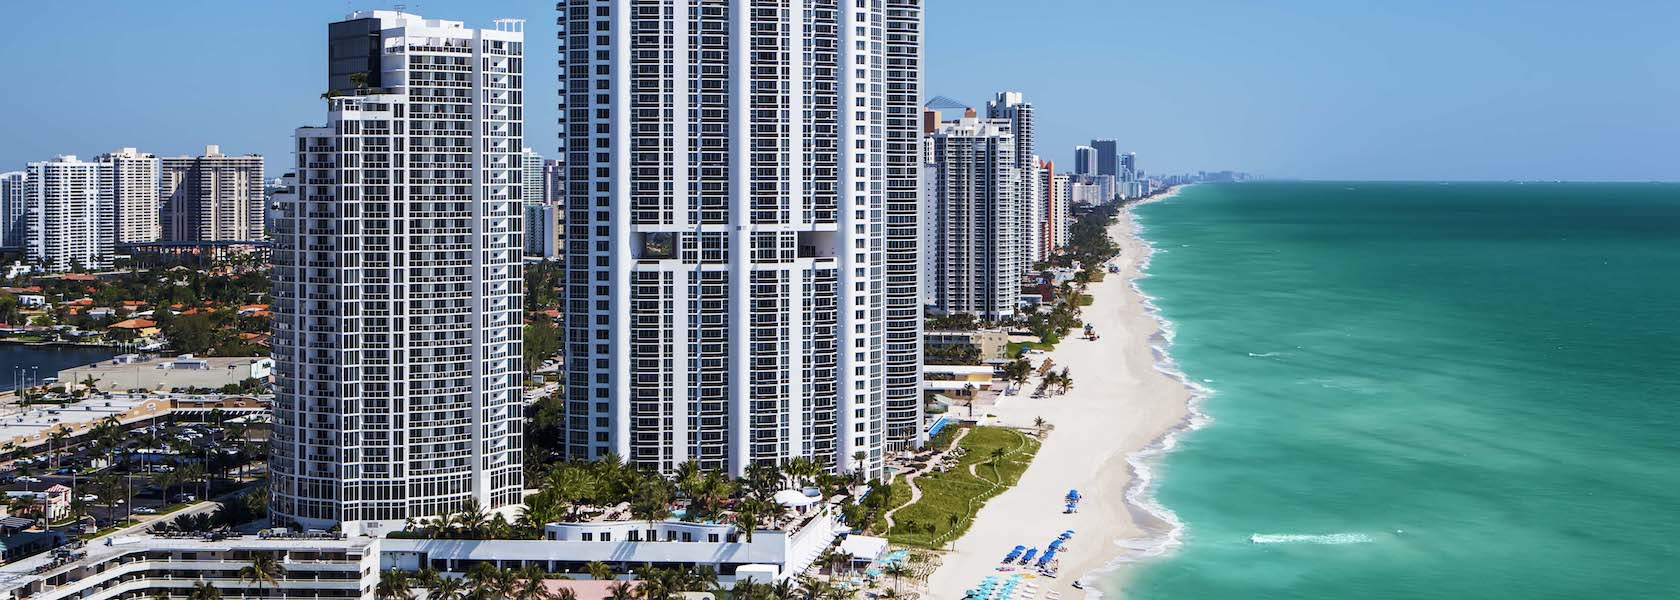 Trump International Beach Resort and hotels lining beach and aqua ocean.